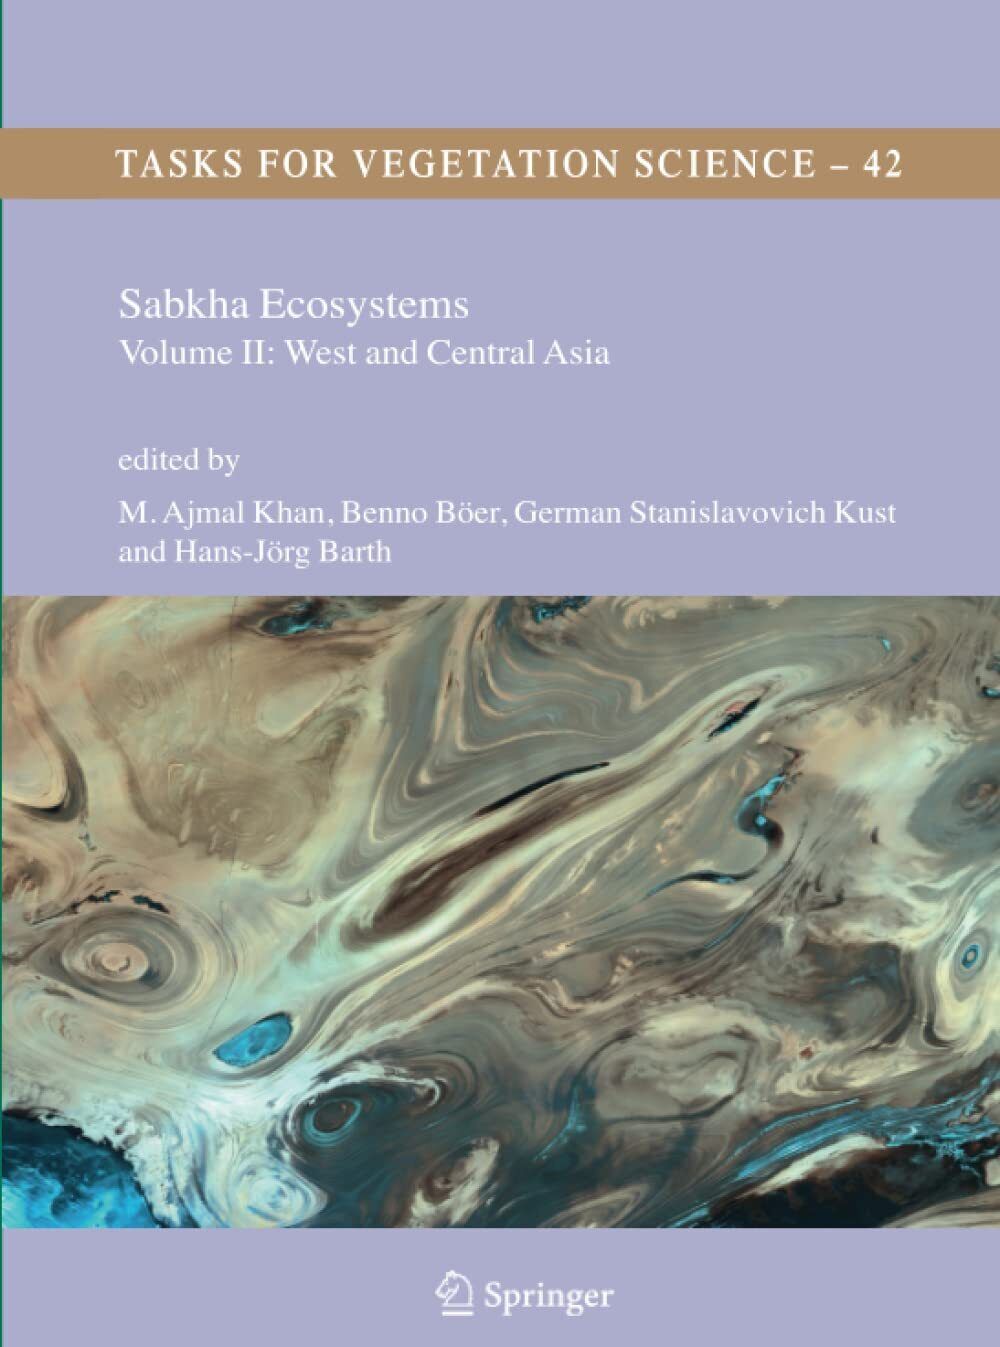 Sabkha Ecosystems - M. Ajmal Khan - Springer, 2010